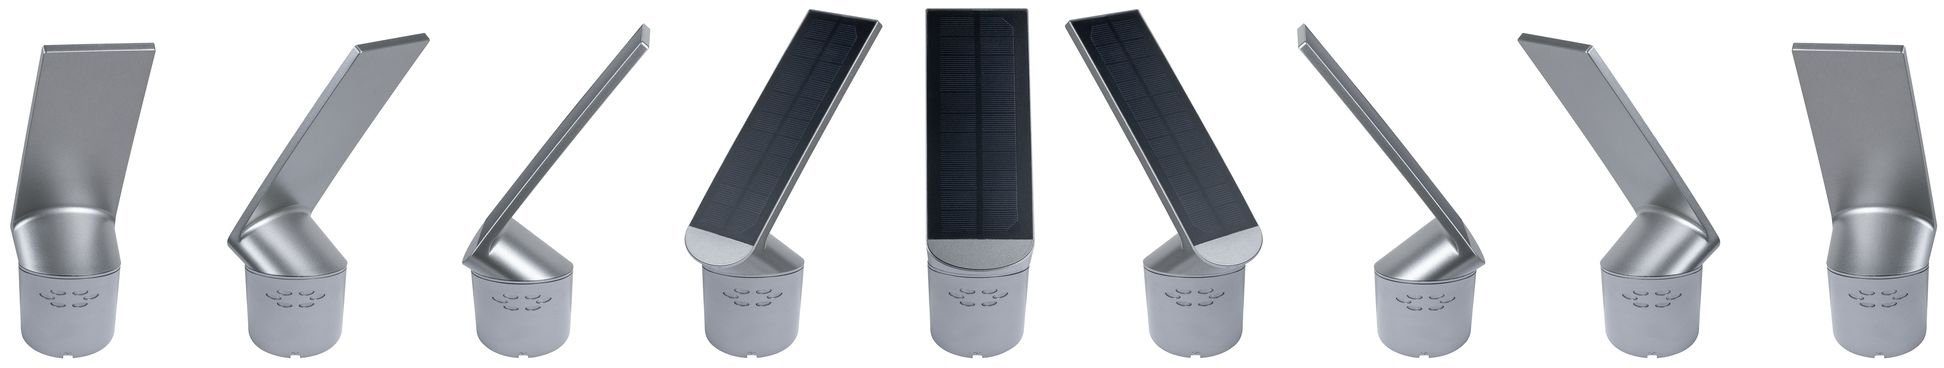 Paulmann LED Pollerleuchte Ilias, Bewegungsmelder, mit Warmweiß, Solar, LED-Board, Bewegungsmelder fest LED integriert, Outdoor